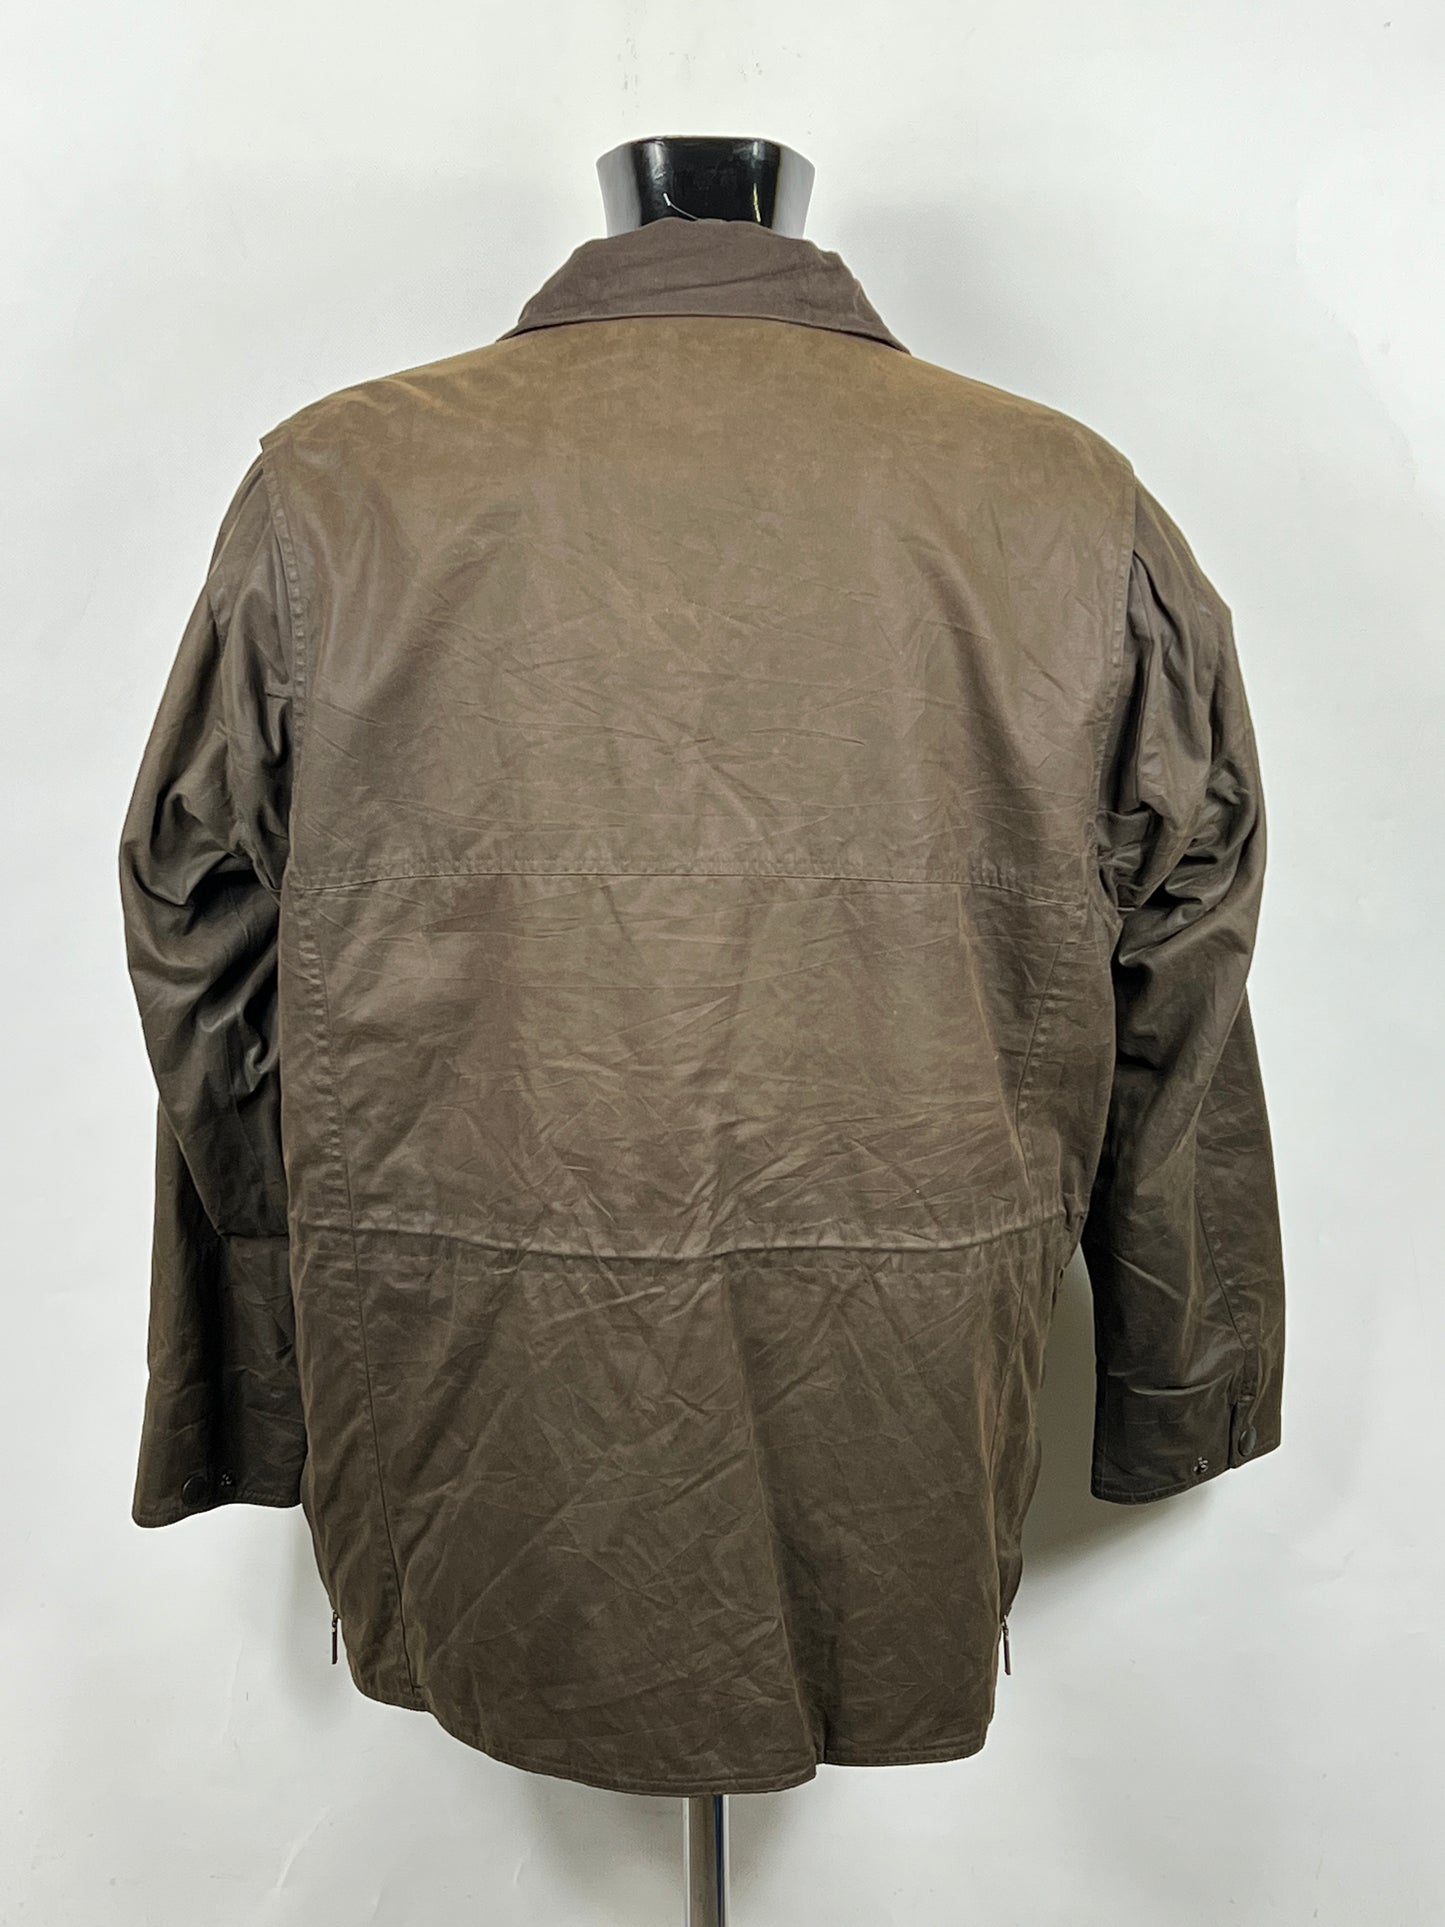 Giacca Barbour Duracotton Marrone Medium -Brown Duracotton Trapper Jacket Size M